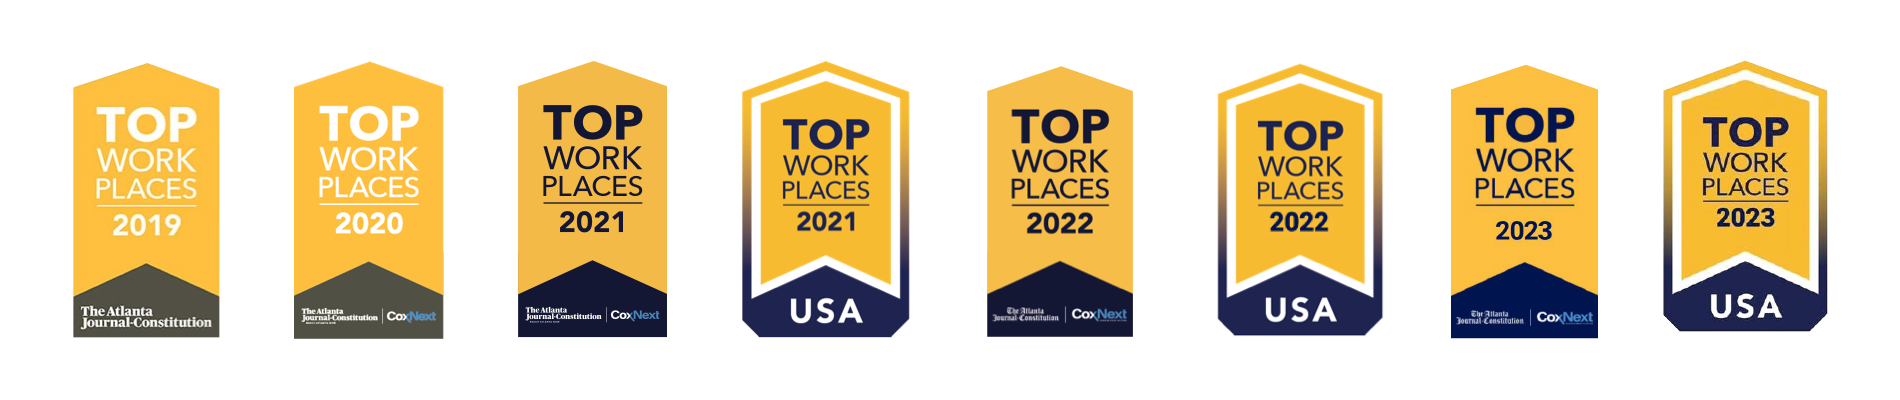 BVL Top Work Places Website badges 2023